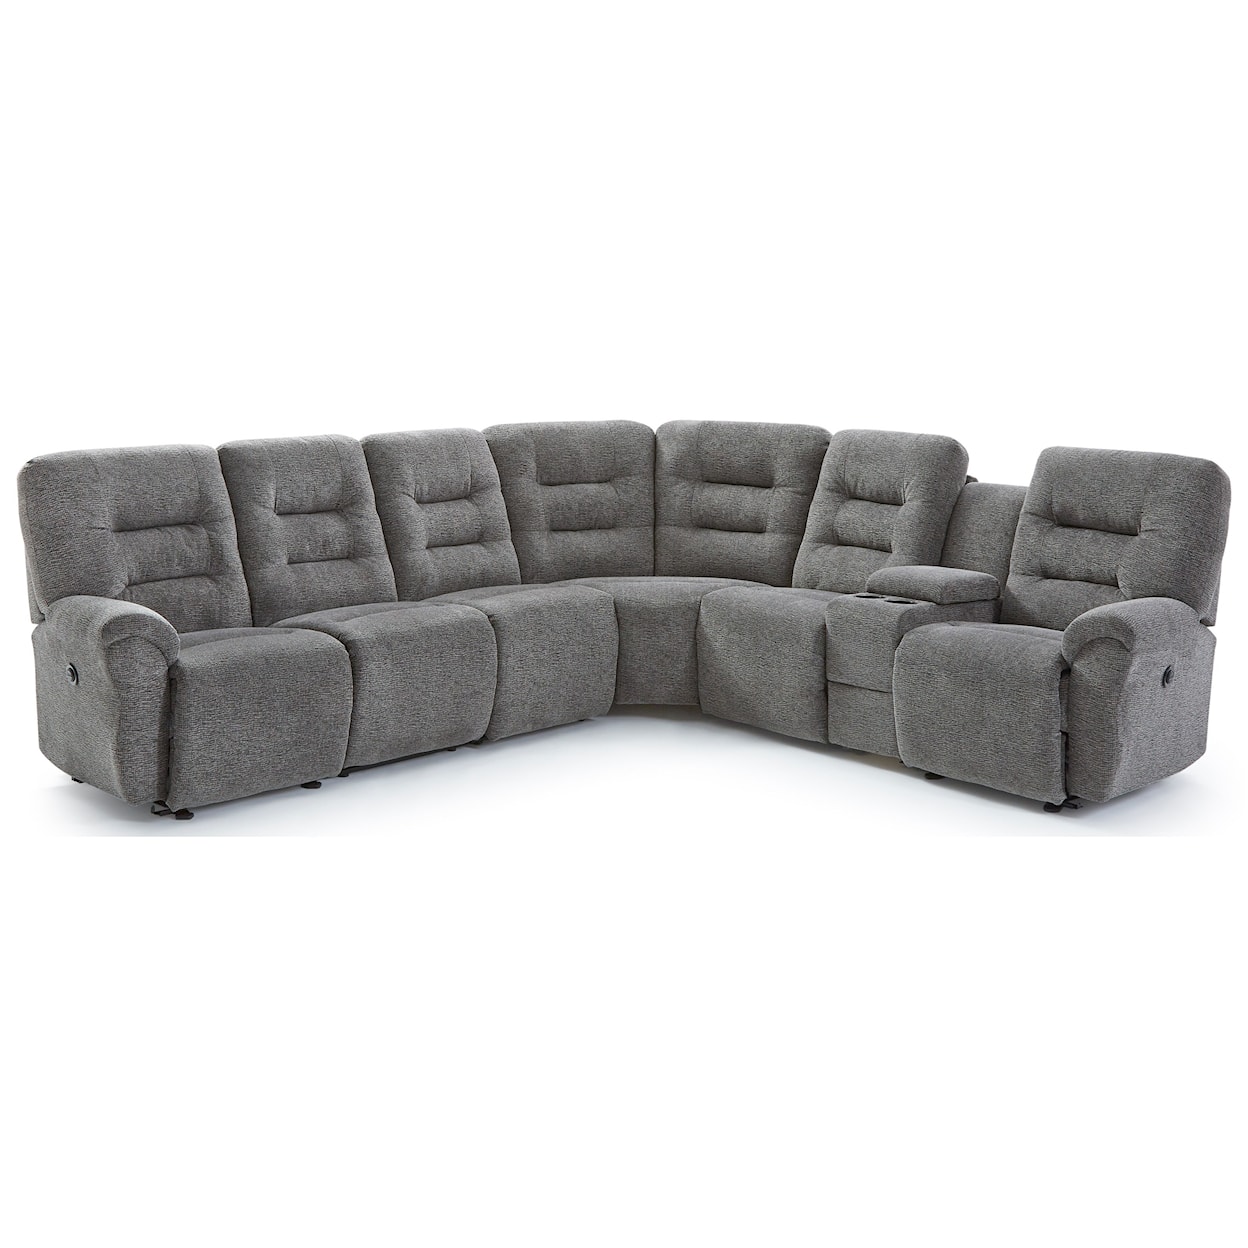 Bravo Furniture Unity 5-Seat Power Reclining Sectional Sofa